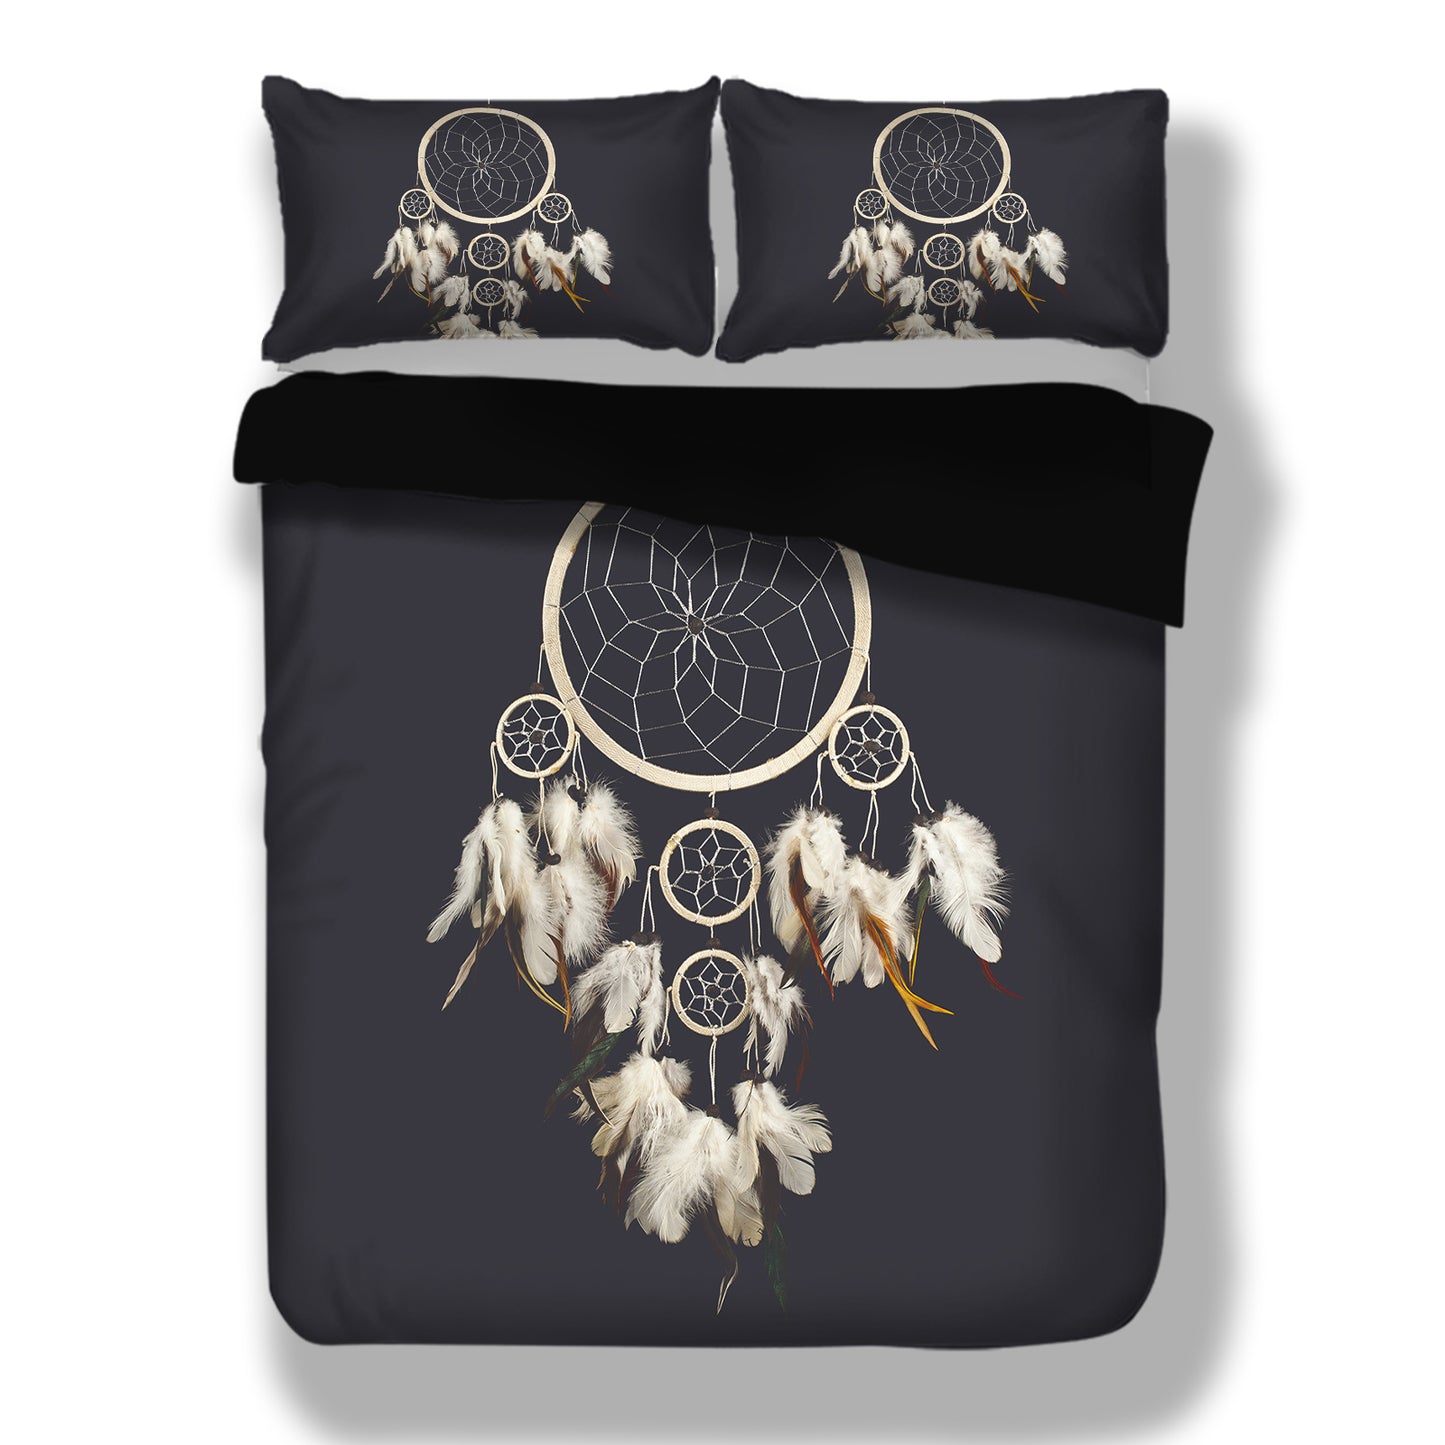 WONGS BEDDING Totem Duvet cover set Bedding Bedroom set